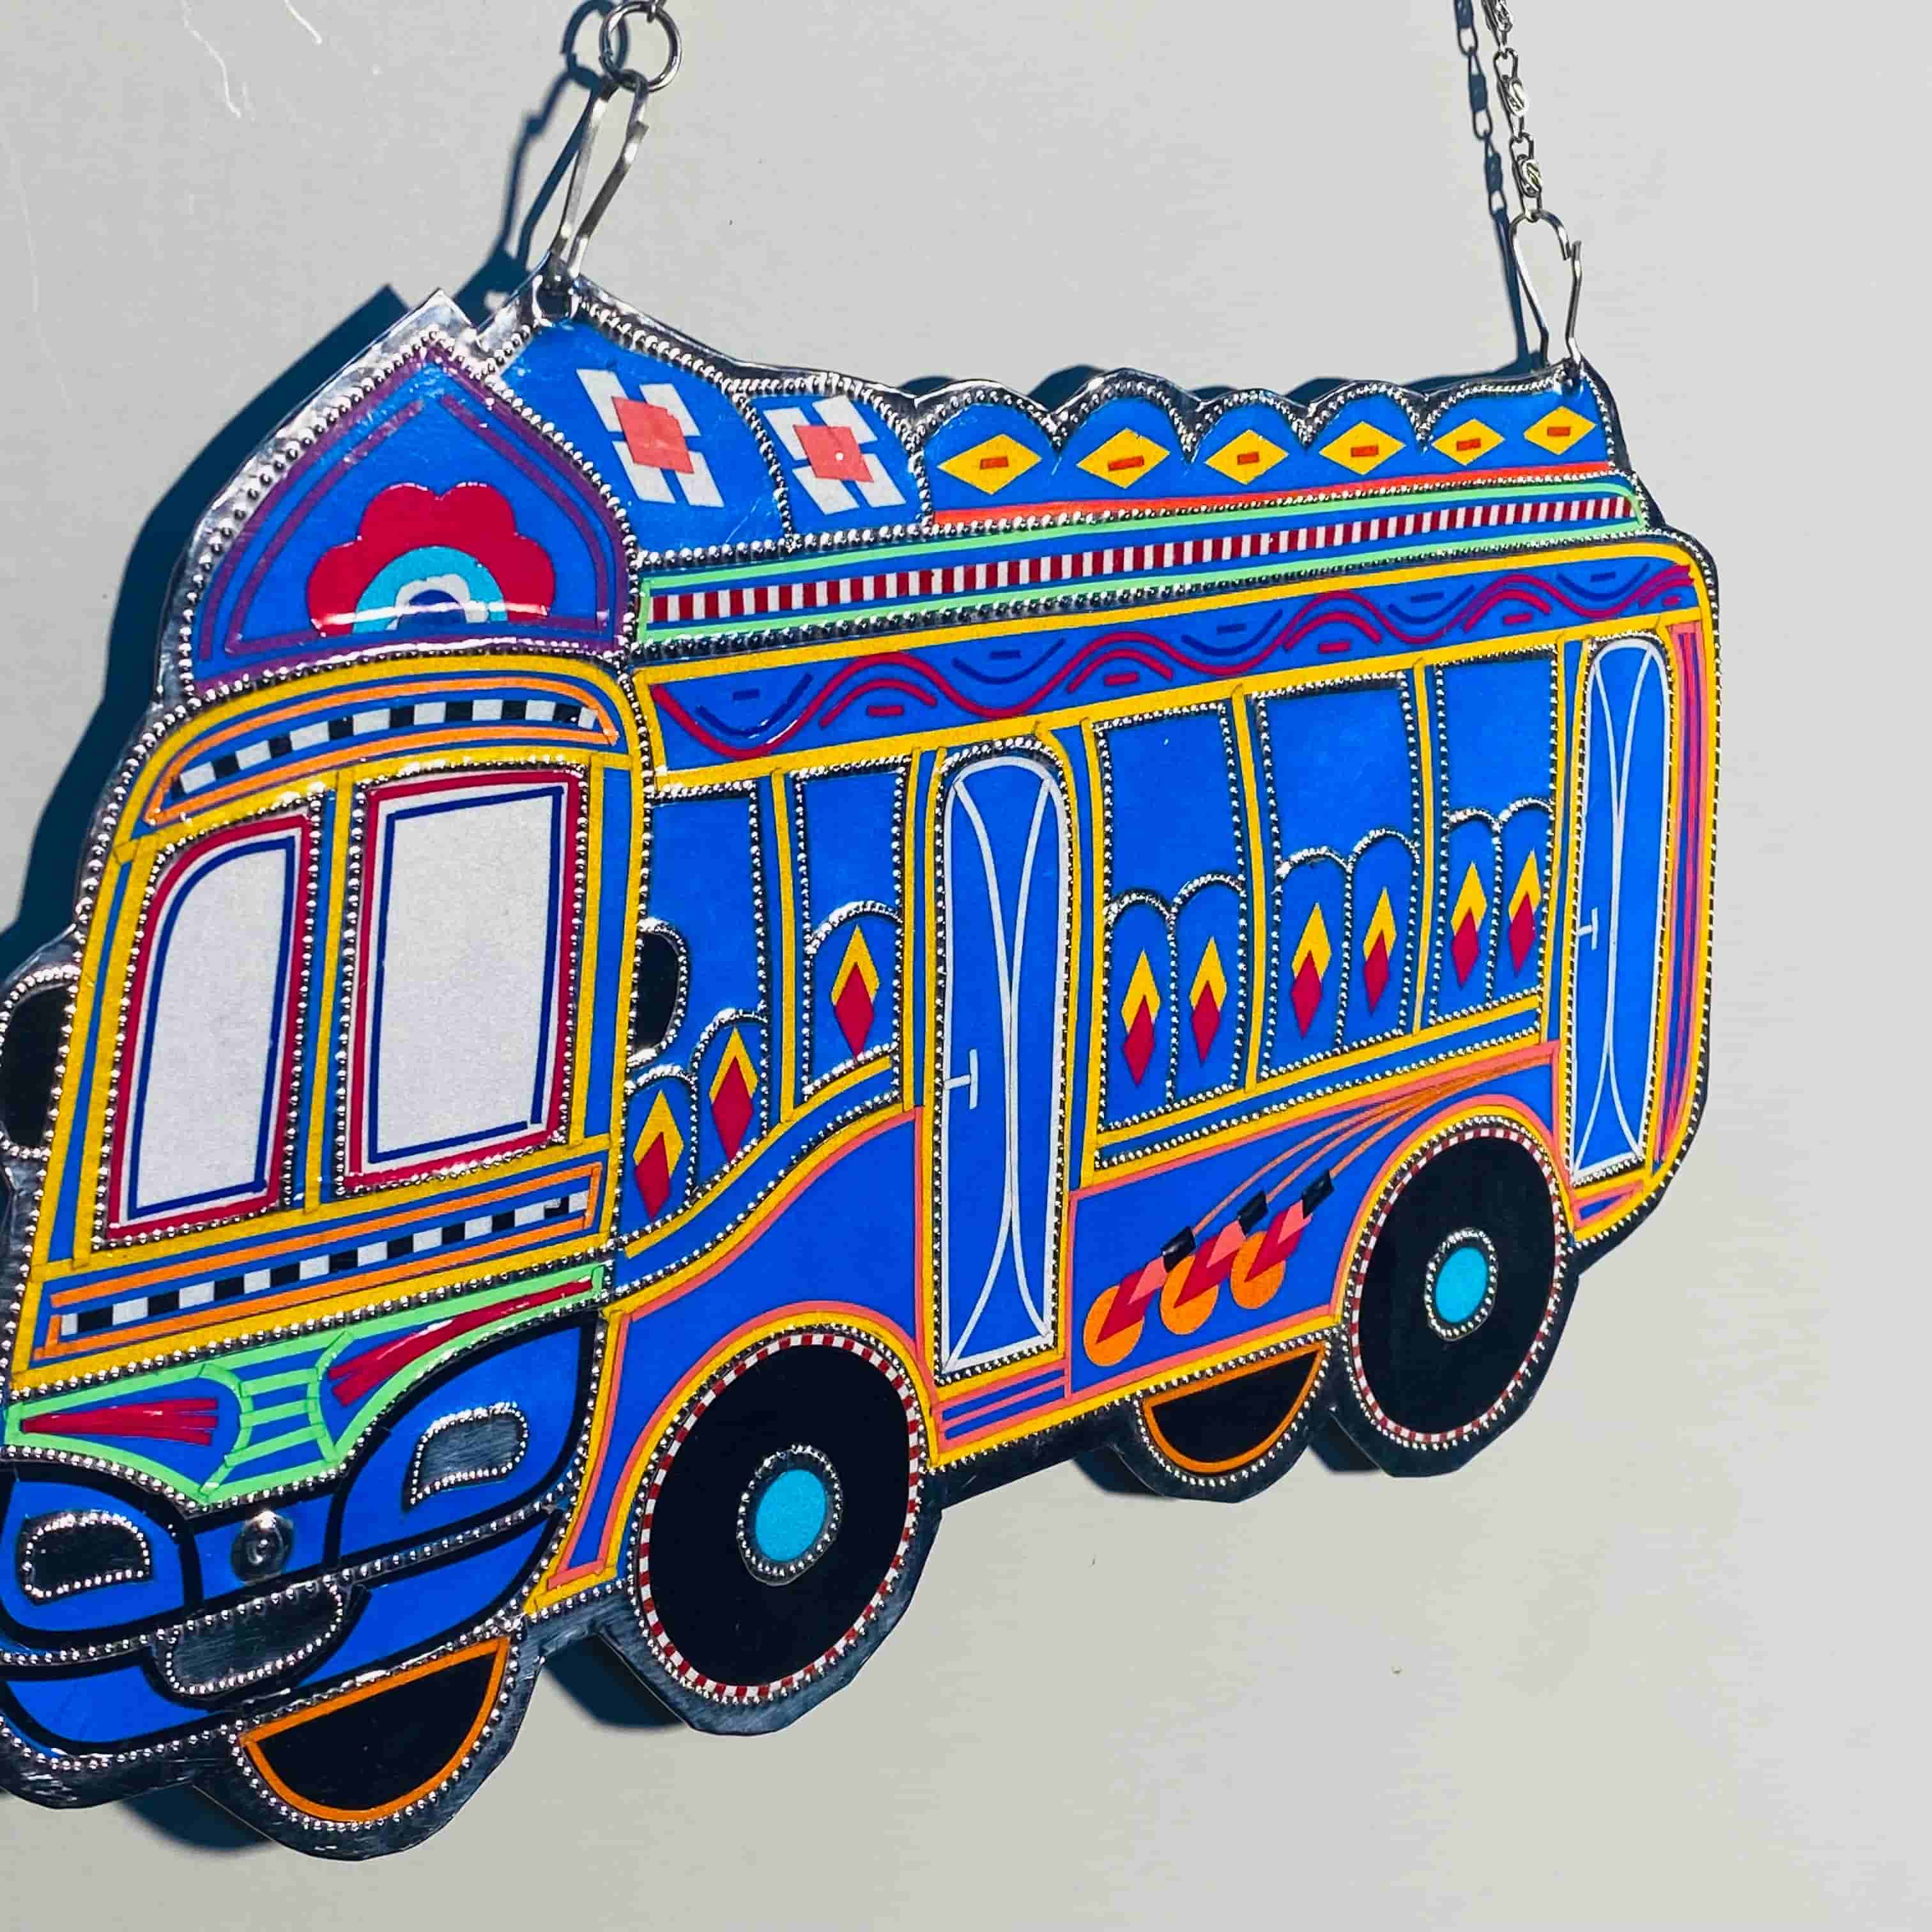 tradition-wall-hanging-pakistan-bus-art-decor-naksh-decor-home-decor-truck-art-wall-hanging-wall-plates-1